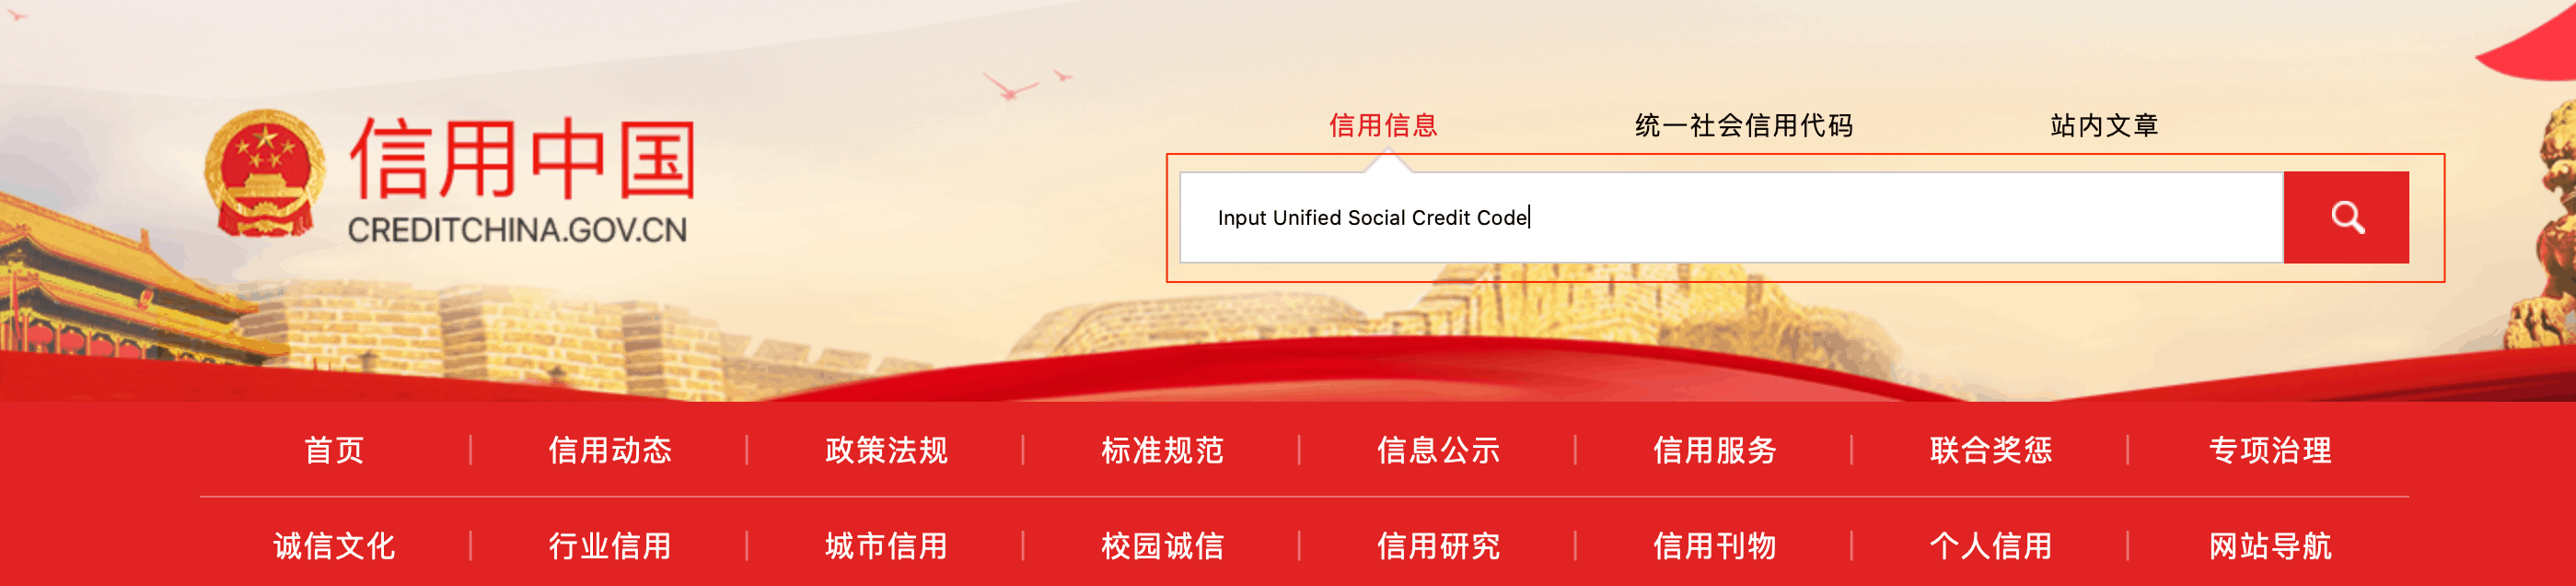 Unified social credit score